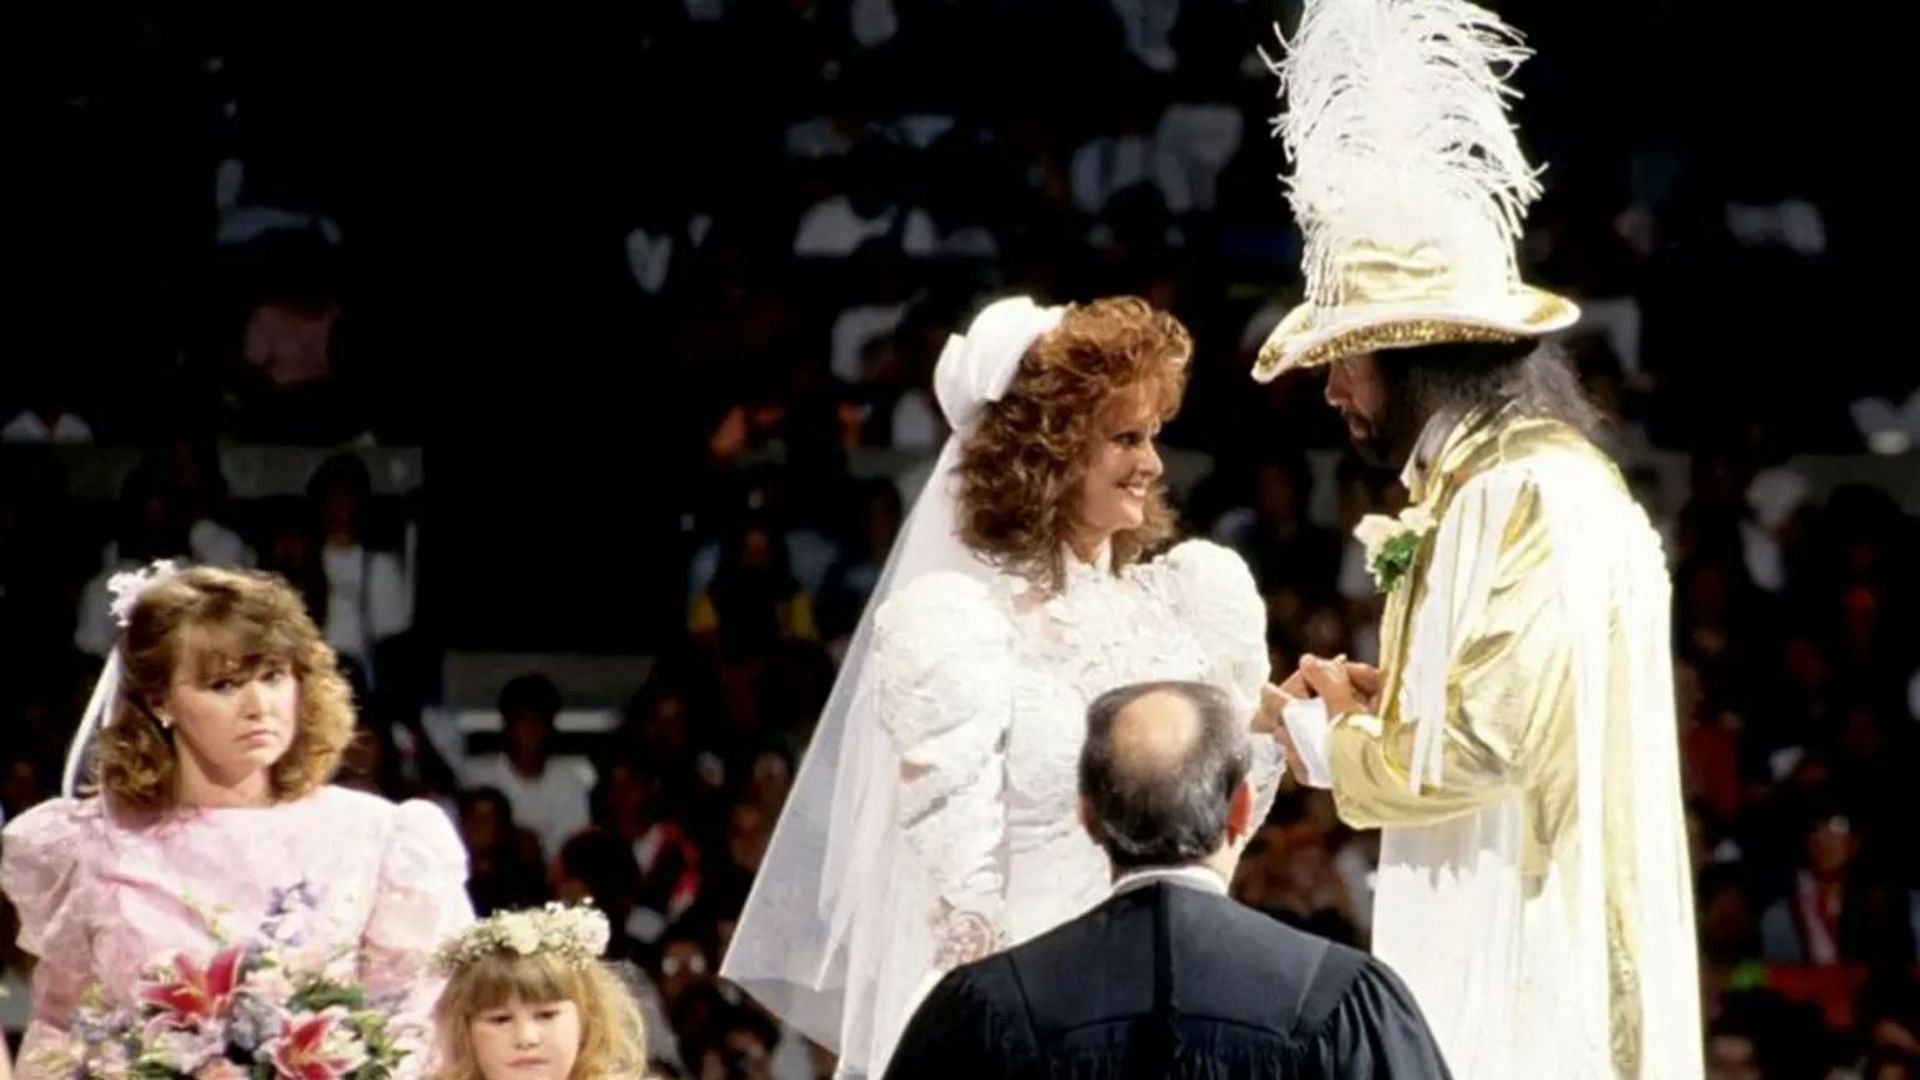 Randy Savage and Miss Elizabeth had an on-screen wedding in 1991